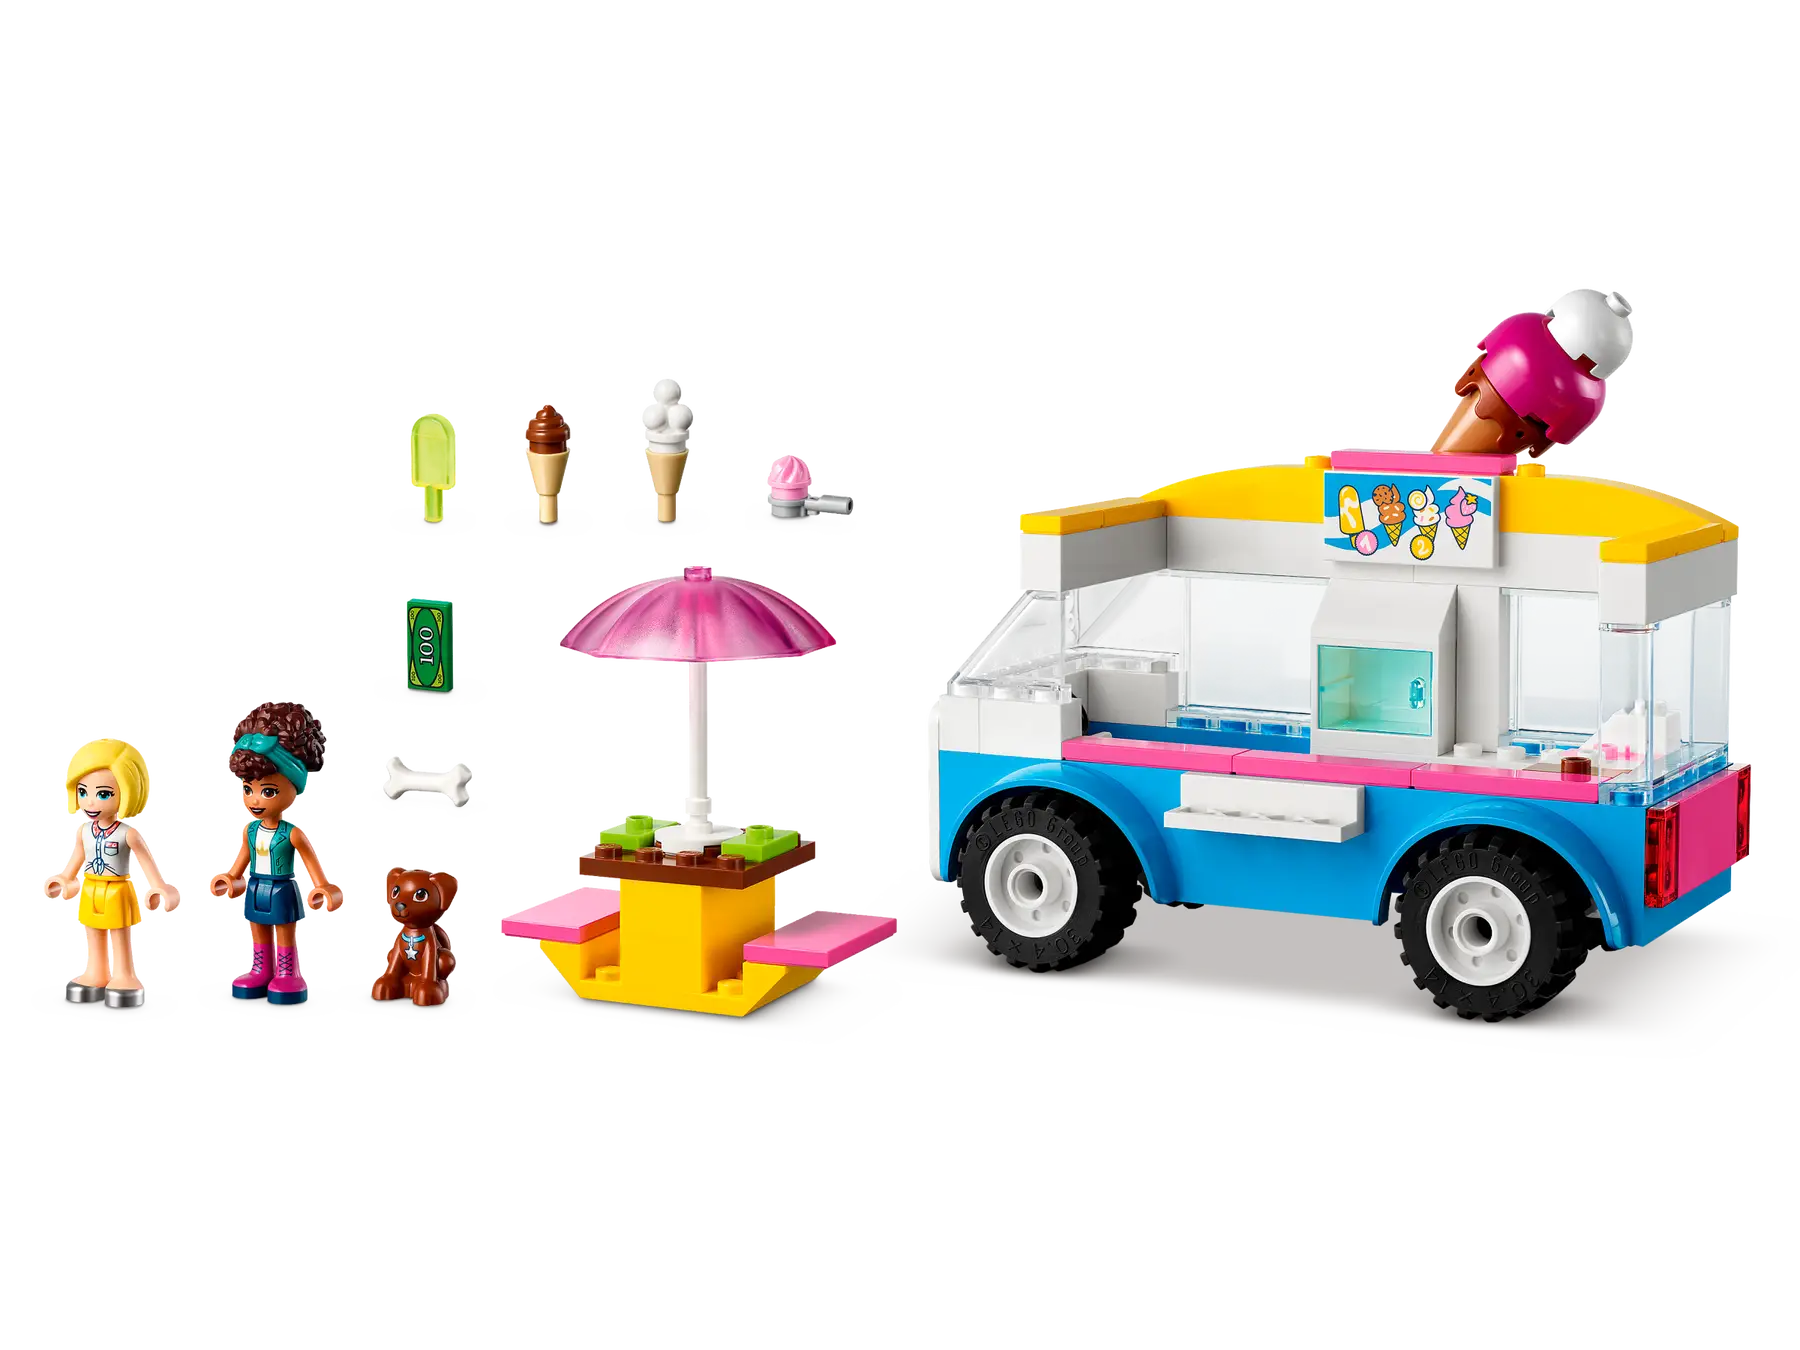 Lego Friends - Ice-Cream Truck